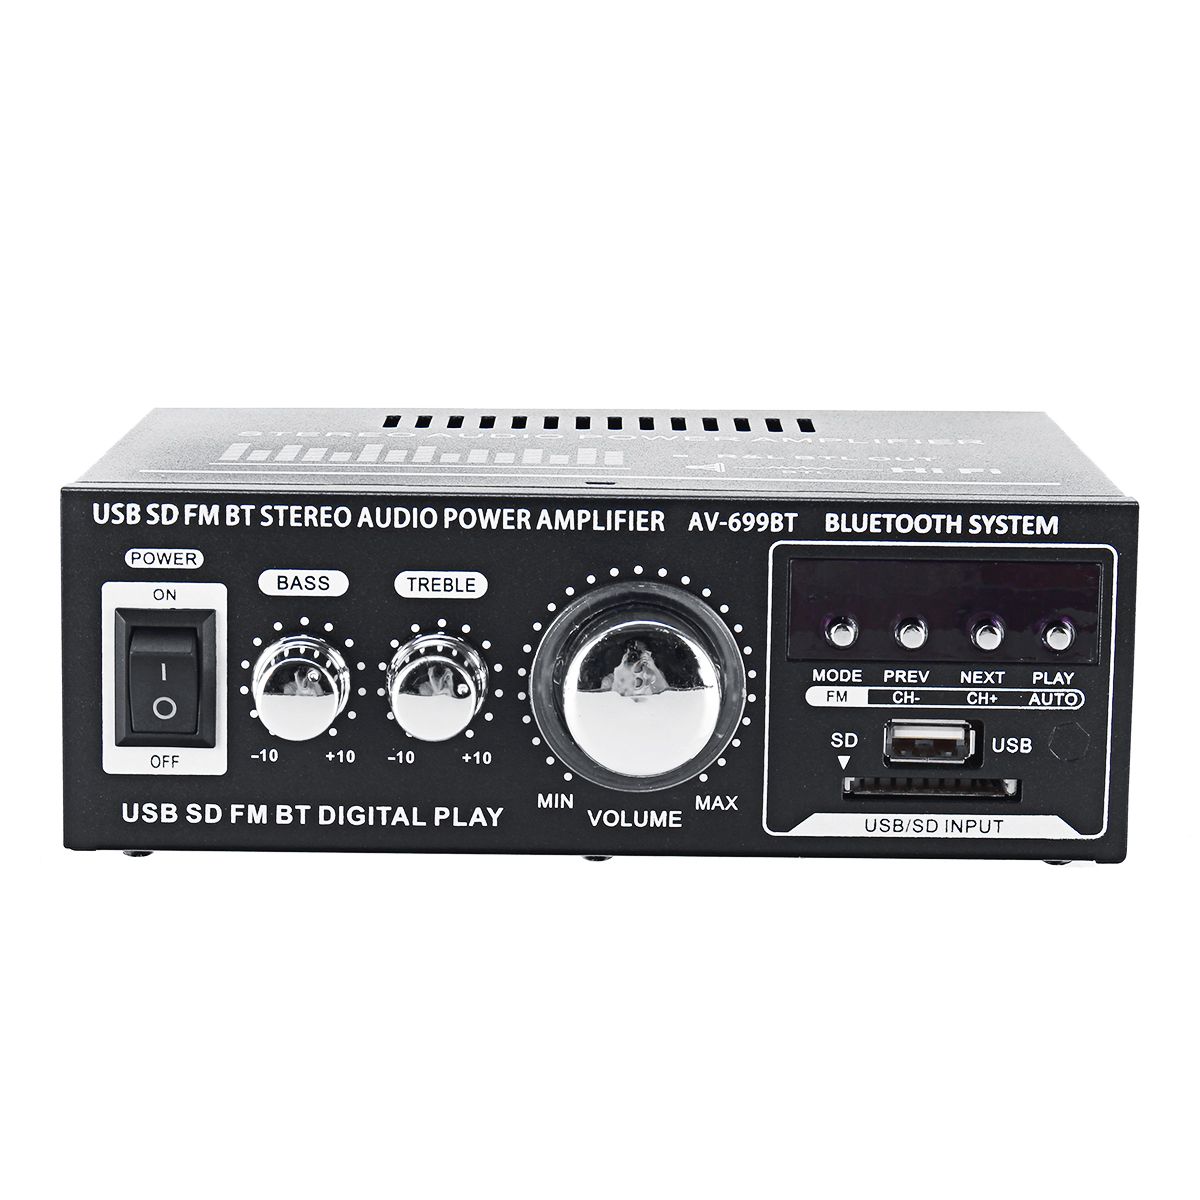 360W-110V12V-bluetooth-Audio-Stereo-FM-2CH-Amplifier-Car-Home-USB-SD-MP3-US-1530625